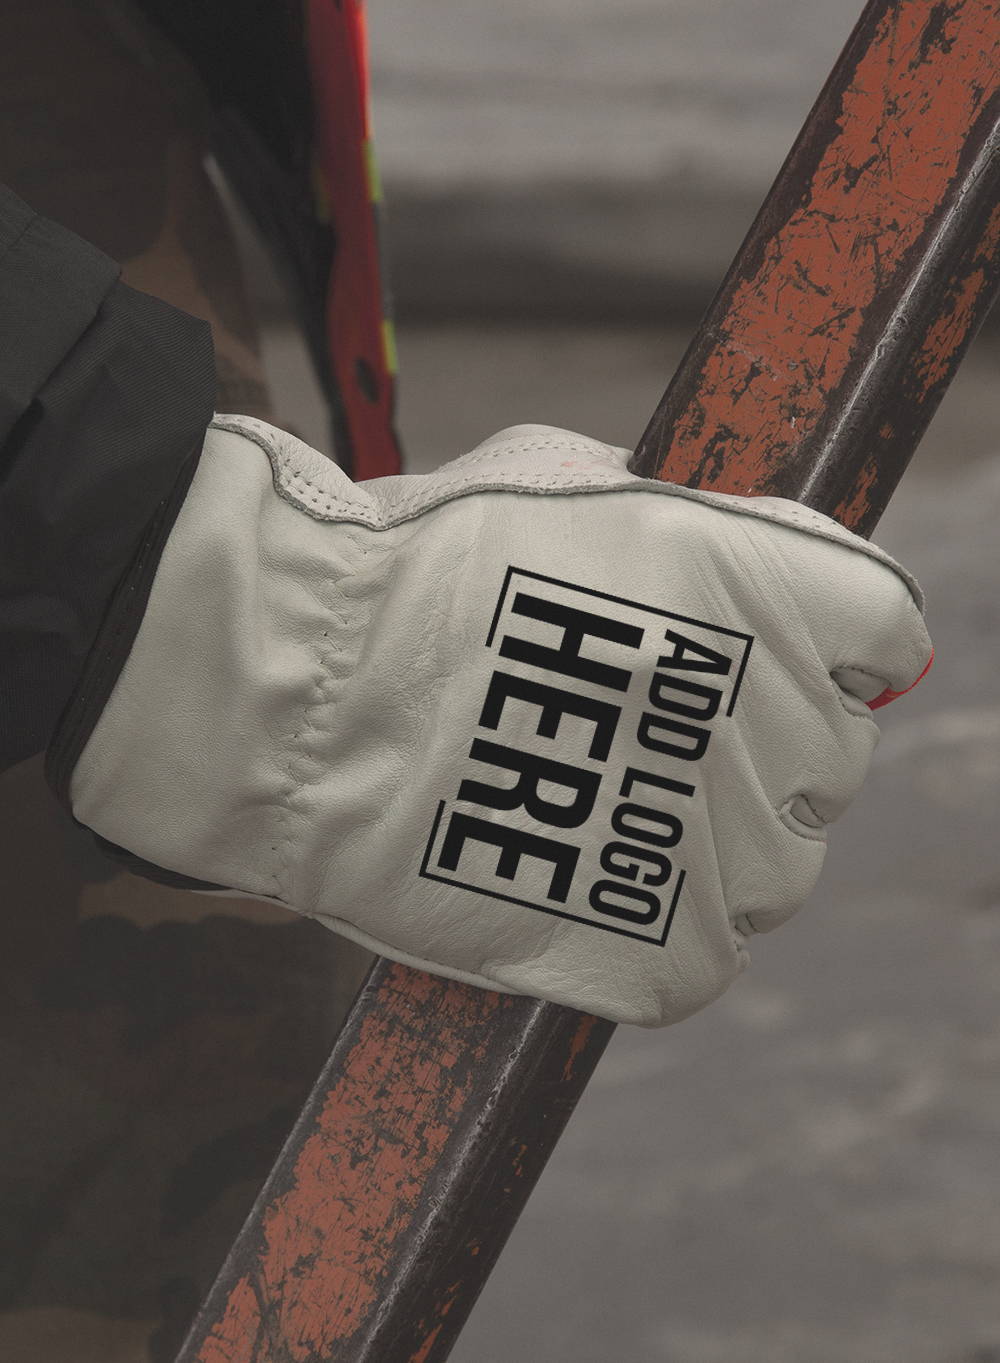 Leather work glove with company logo custom printed on back of glove.